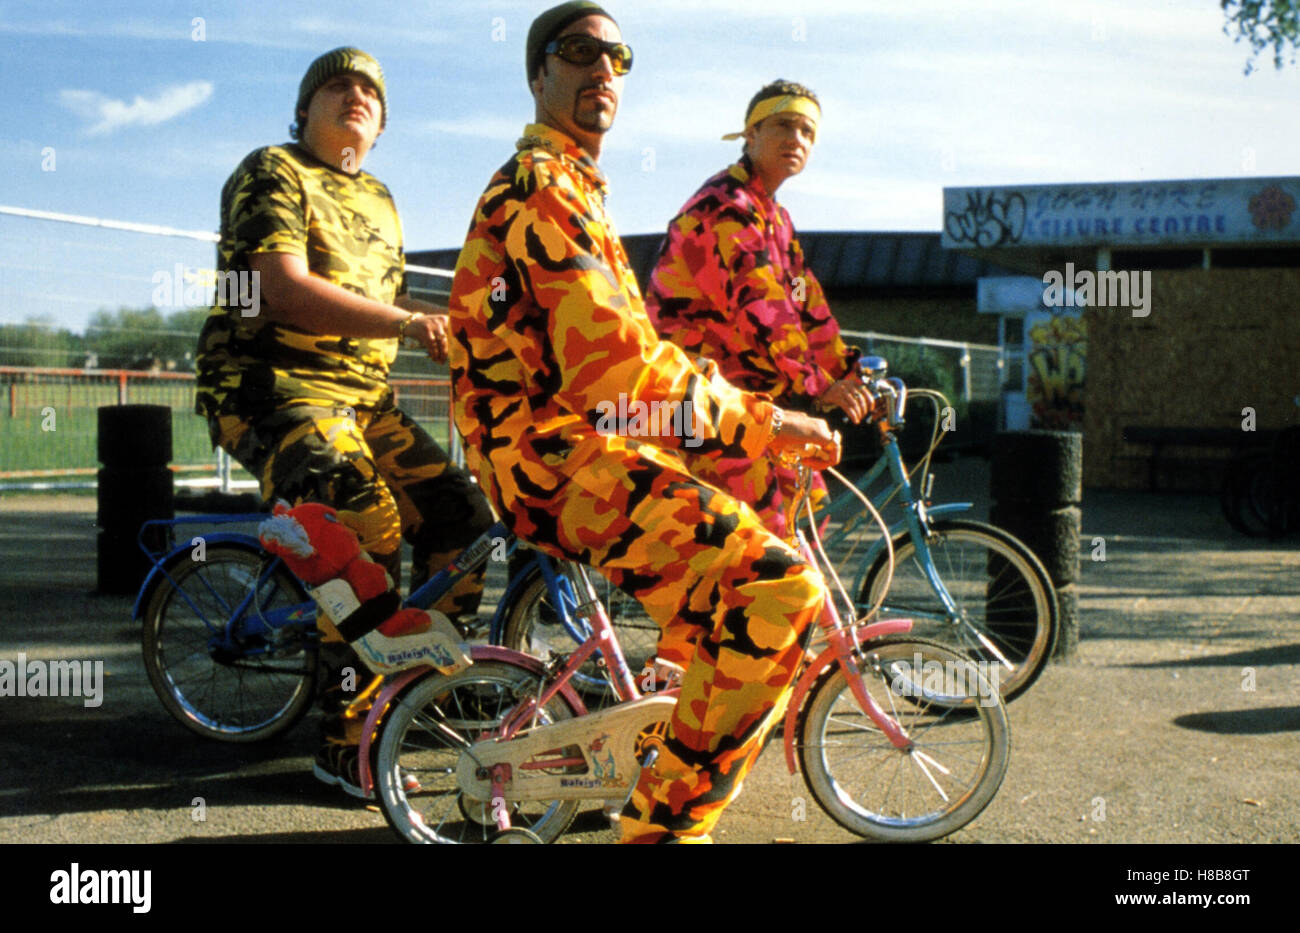 Ali G Indahouse, (ALI G INDAHOUSE) GB 2002, Regie: Mark Mylod, SACHA BARON COHEN, MARTIN FREEMAN (II), Key: Fahrrad, Fahrradfahrer, Radler Stock Photo